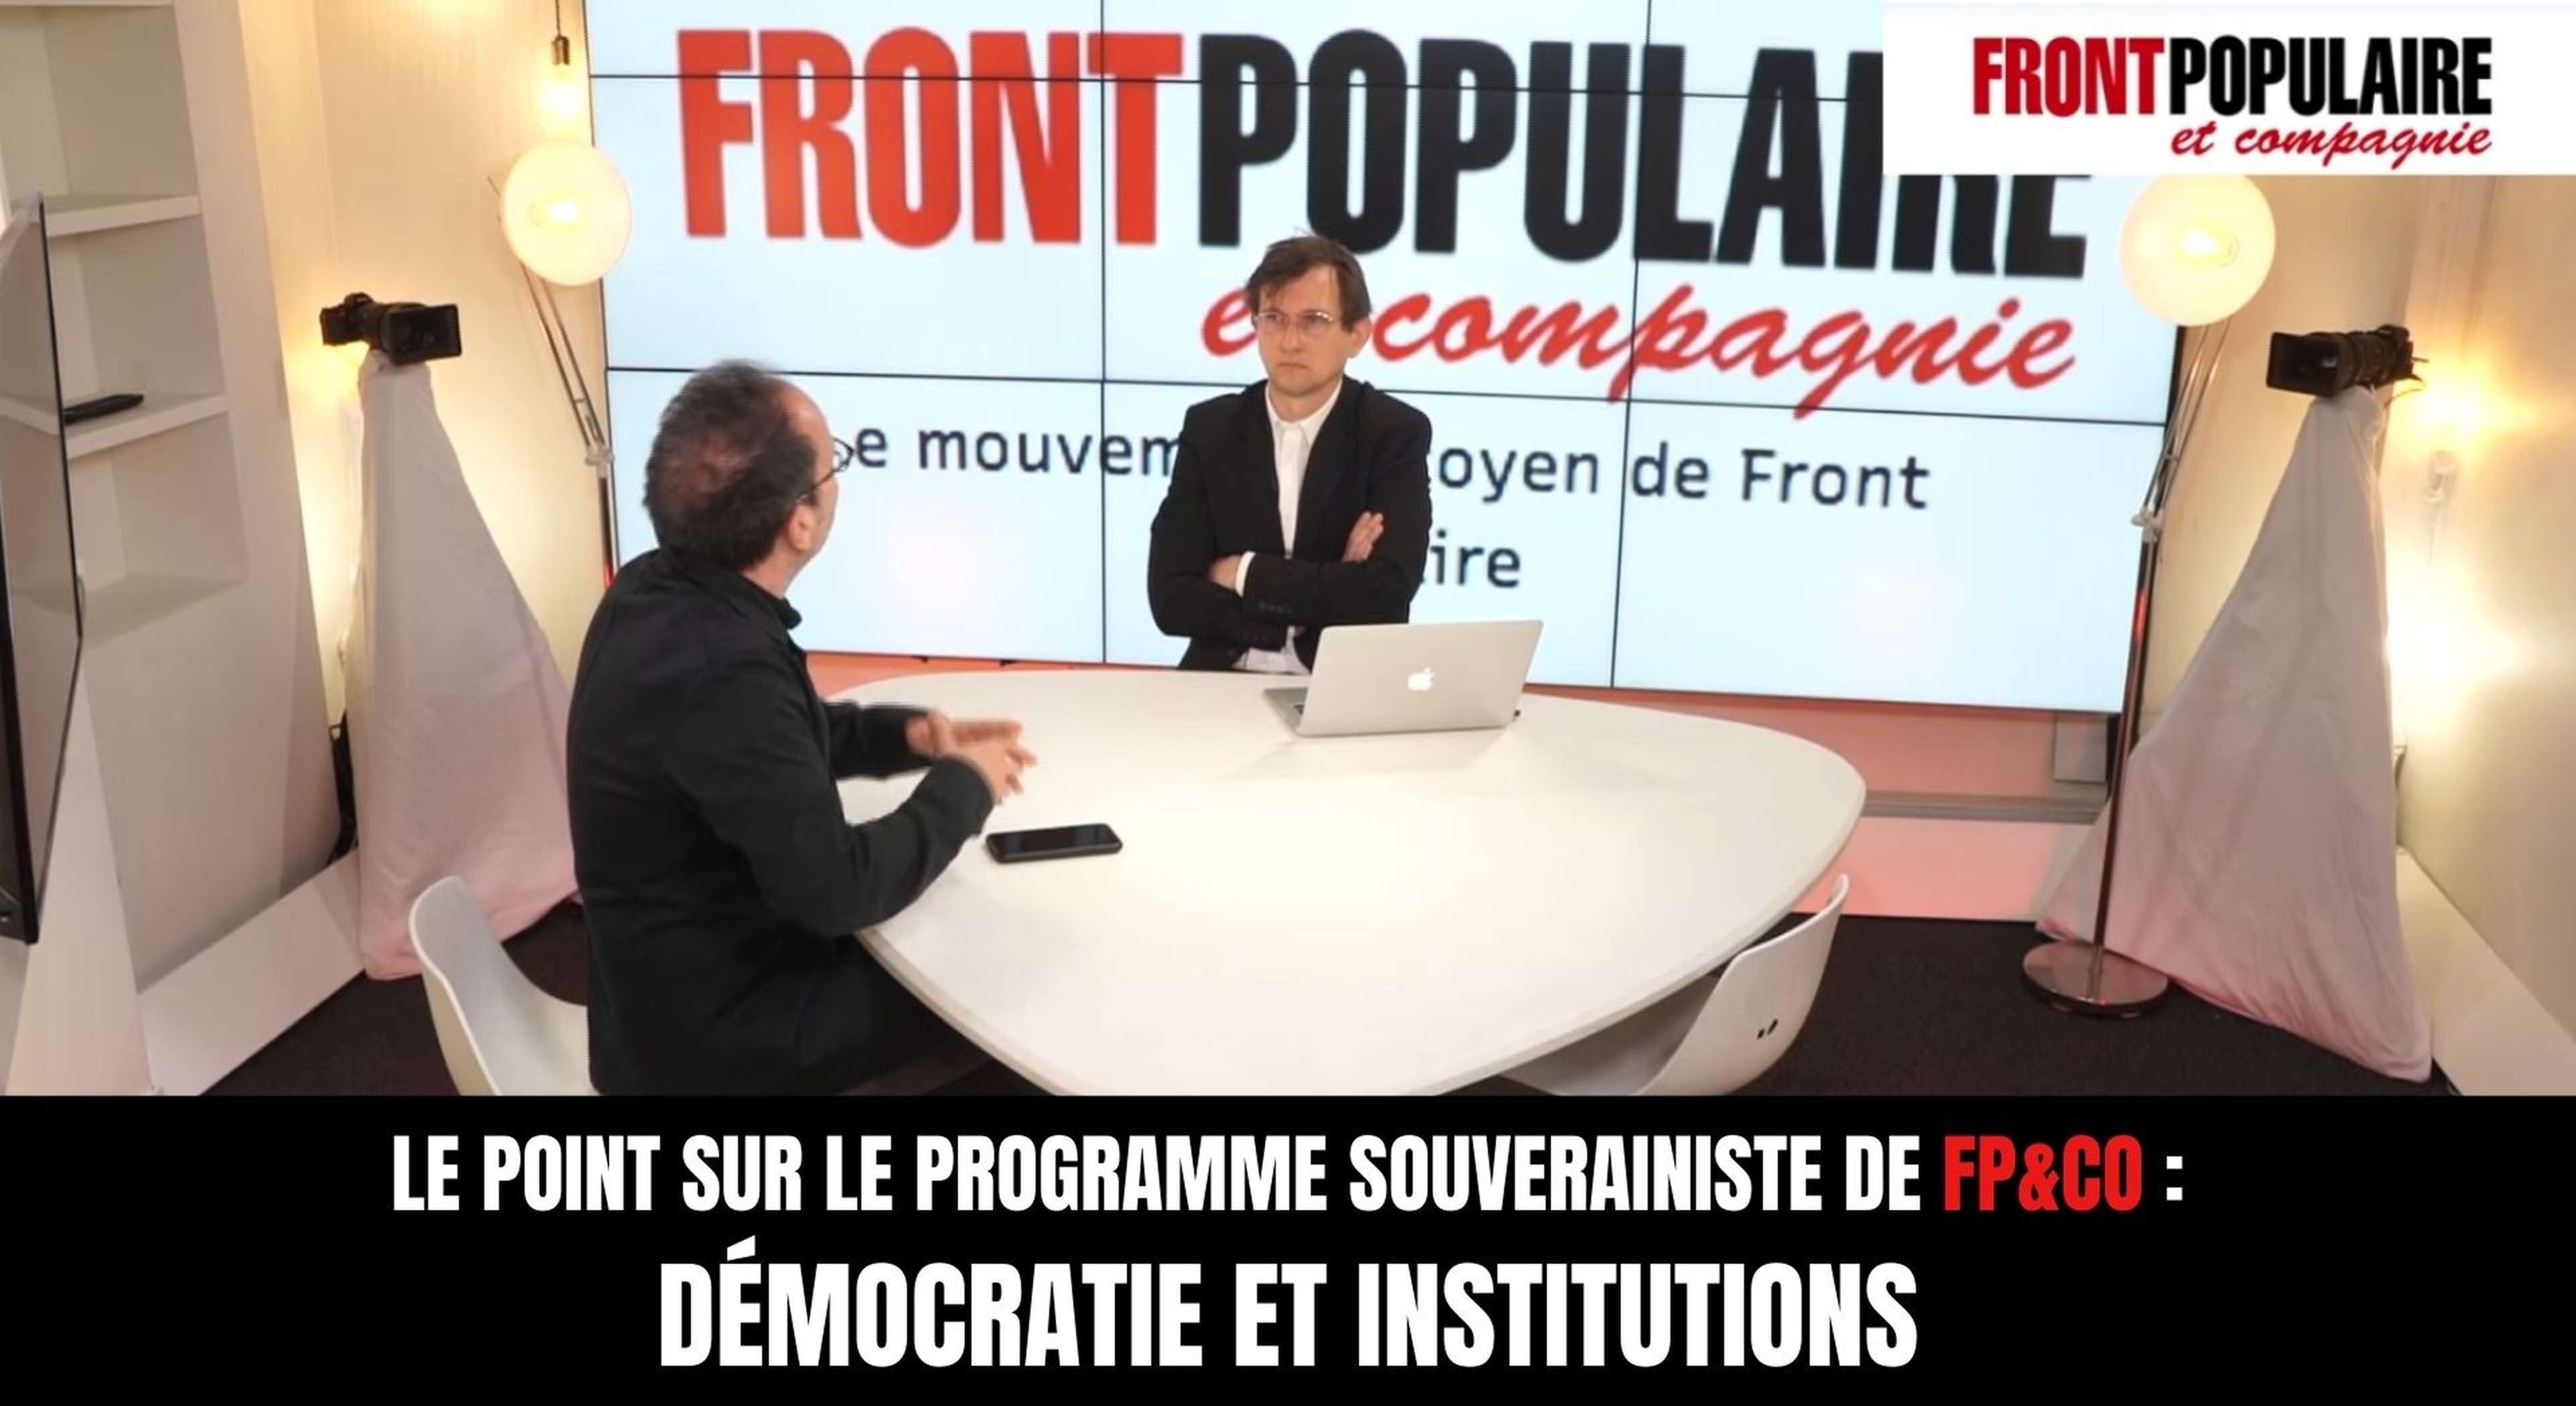 /2021/06/front-populaire-et-cie-democratie-institutions